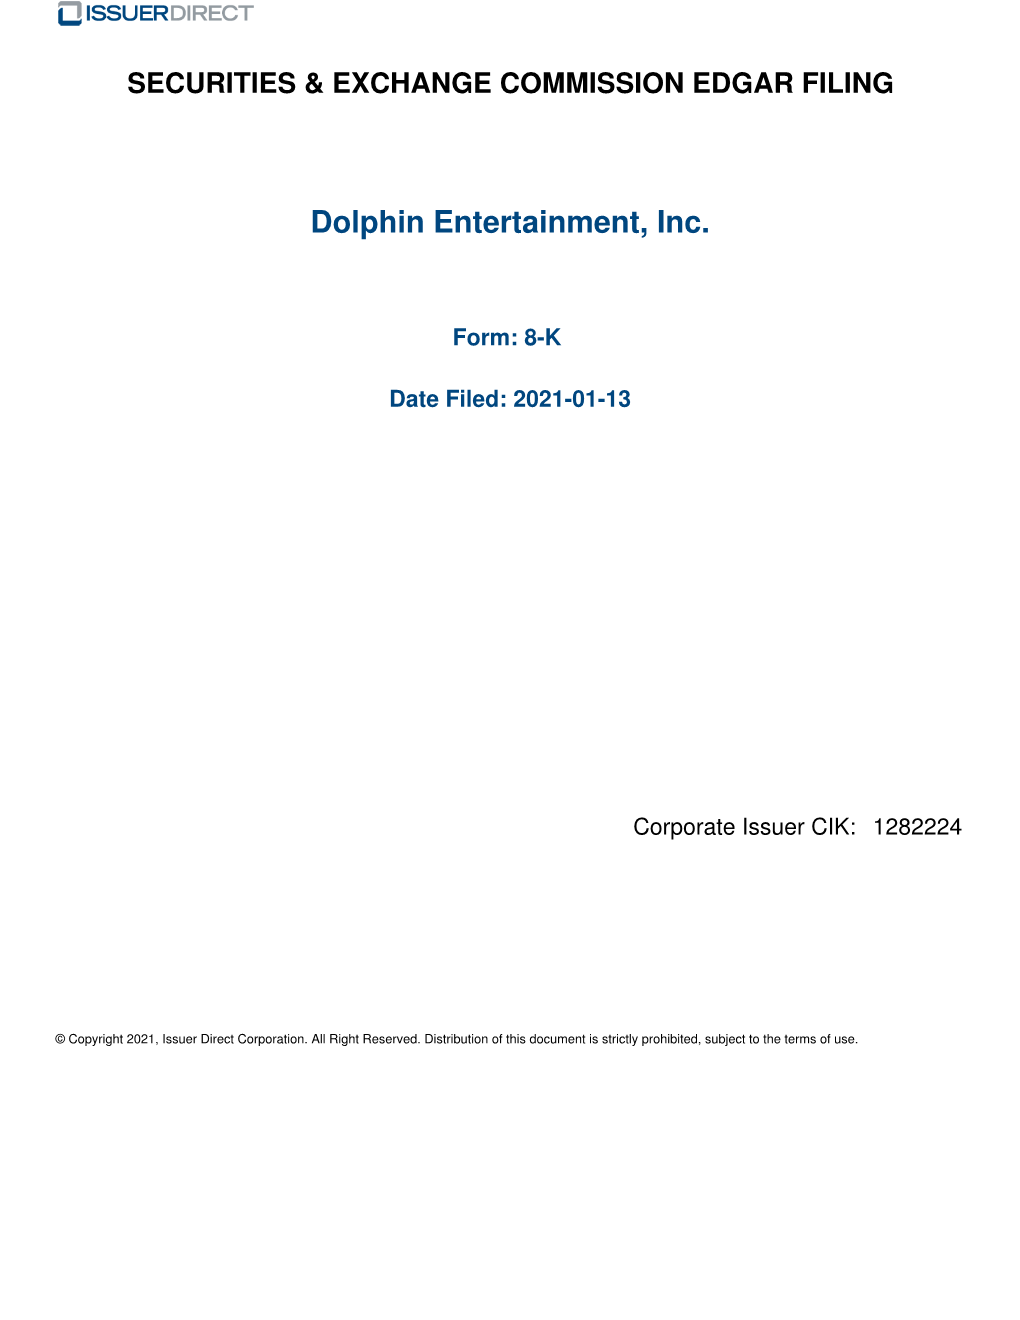 Dolphin Entertainment, Inc